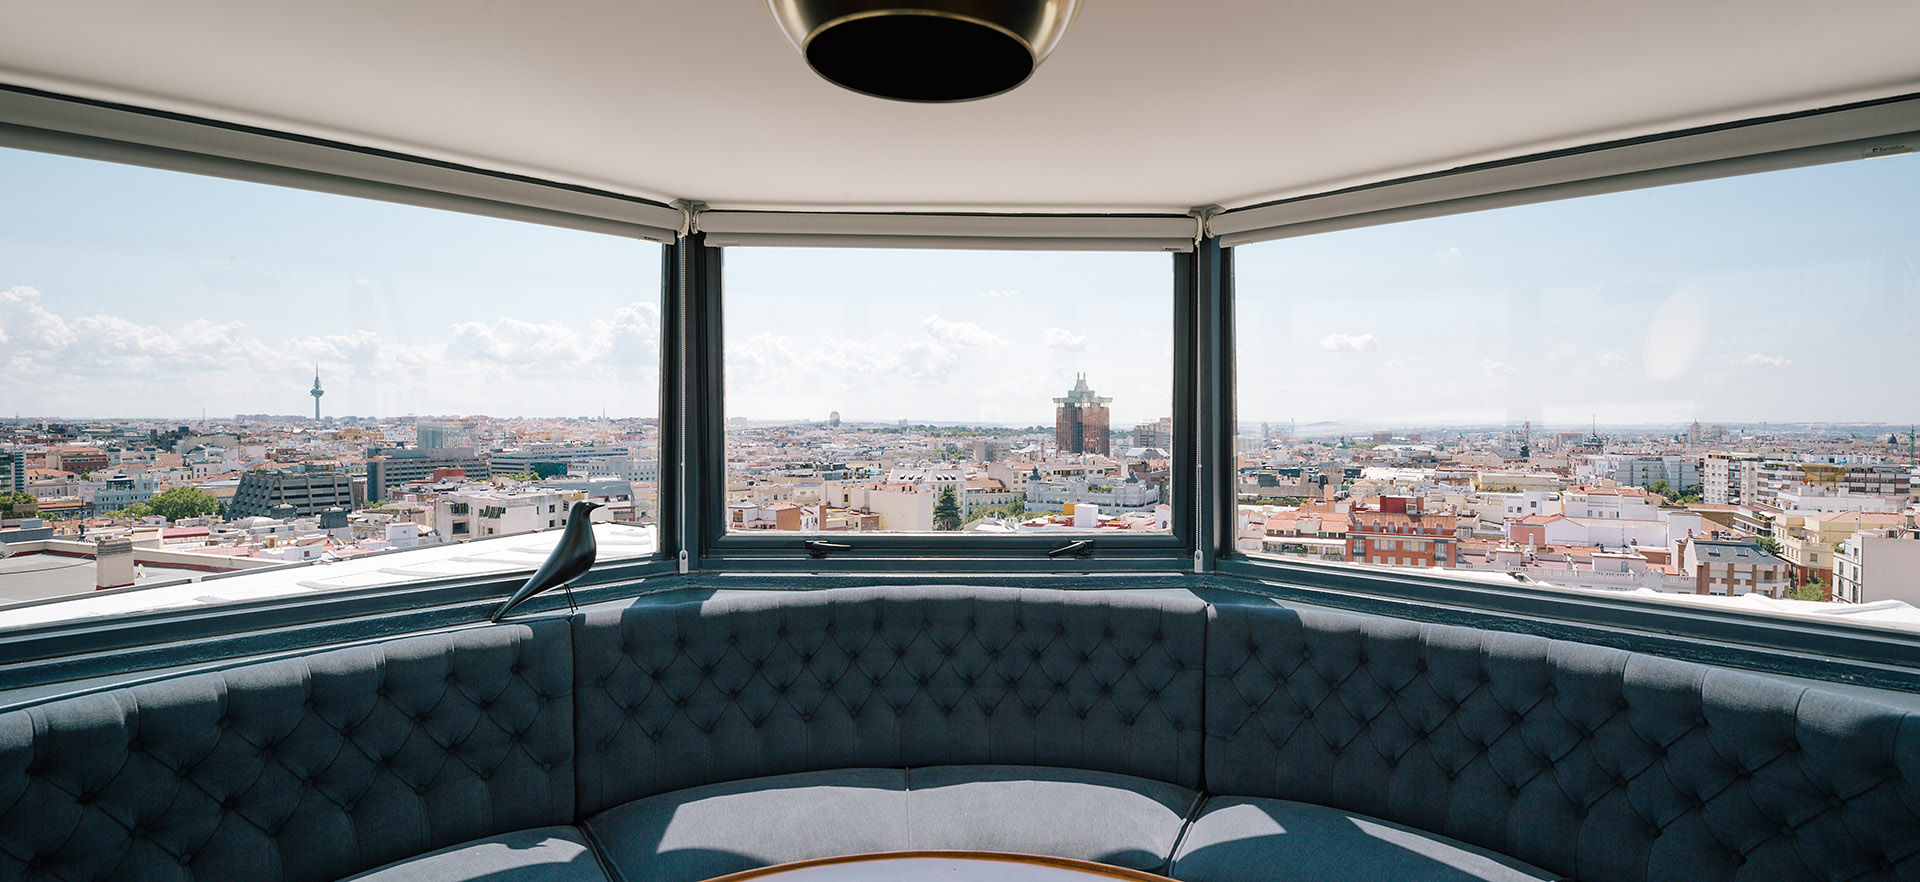 “Un chalet en el cielo de Madrid”, ImagenSubliminal ImagenSubliminal Modern living room